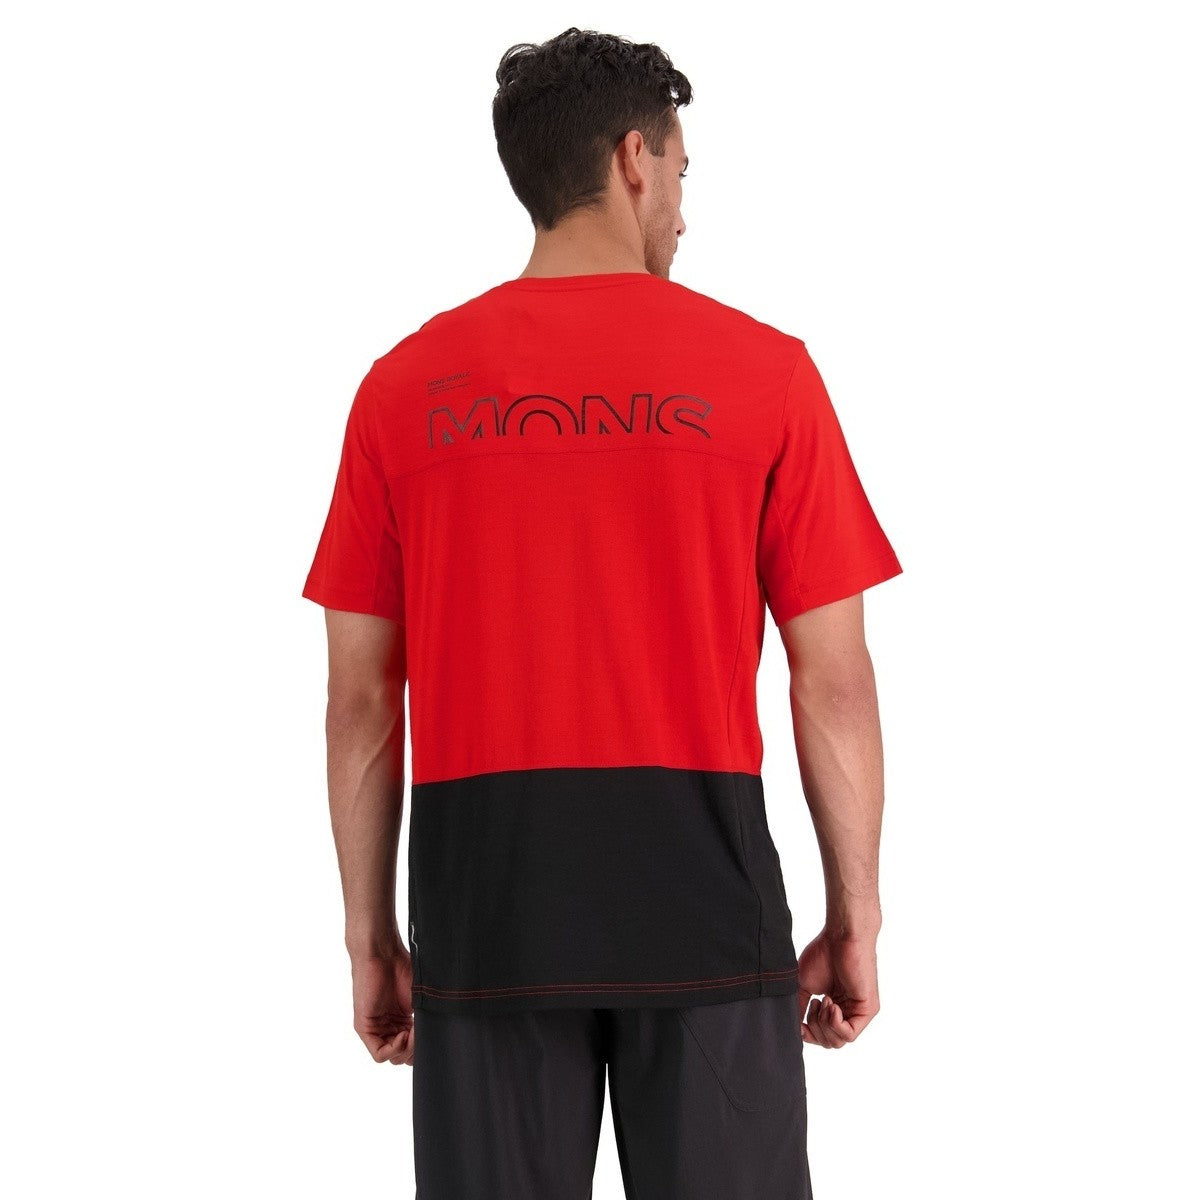 Mons Royale Men's Tarn Merino Shift T-Shirt - Retro Red / Black